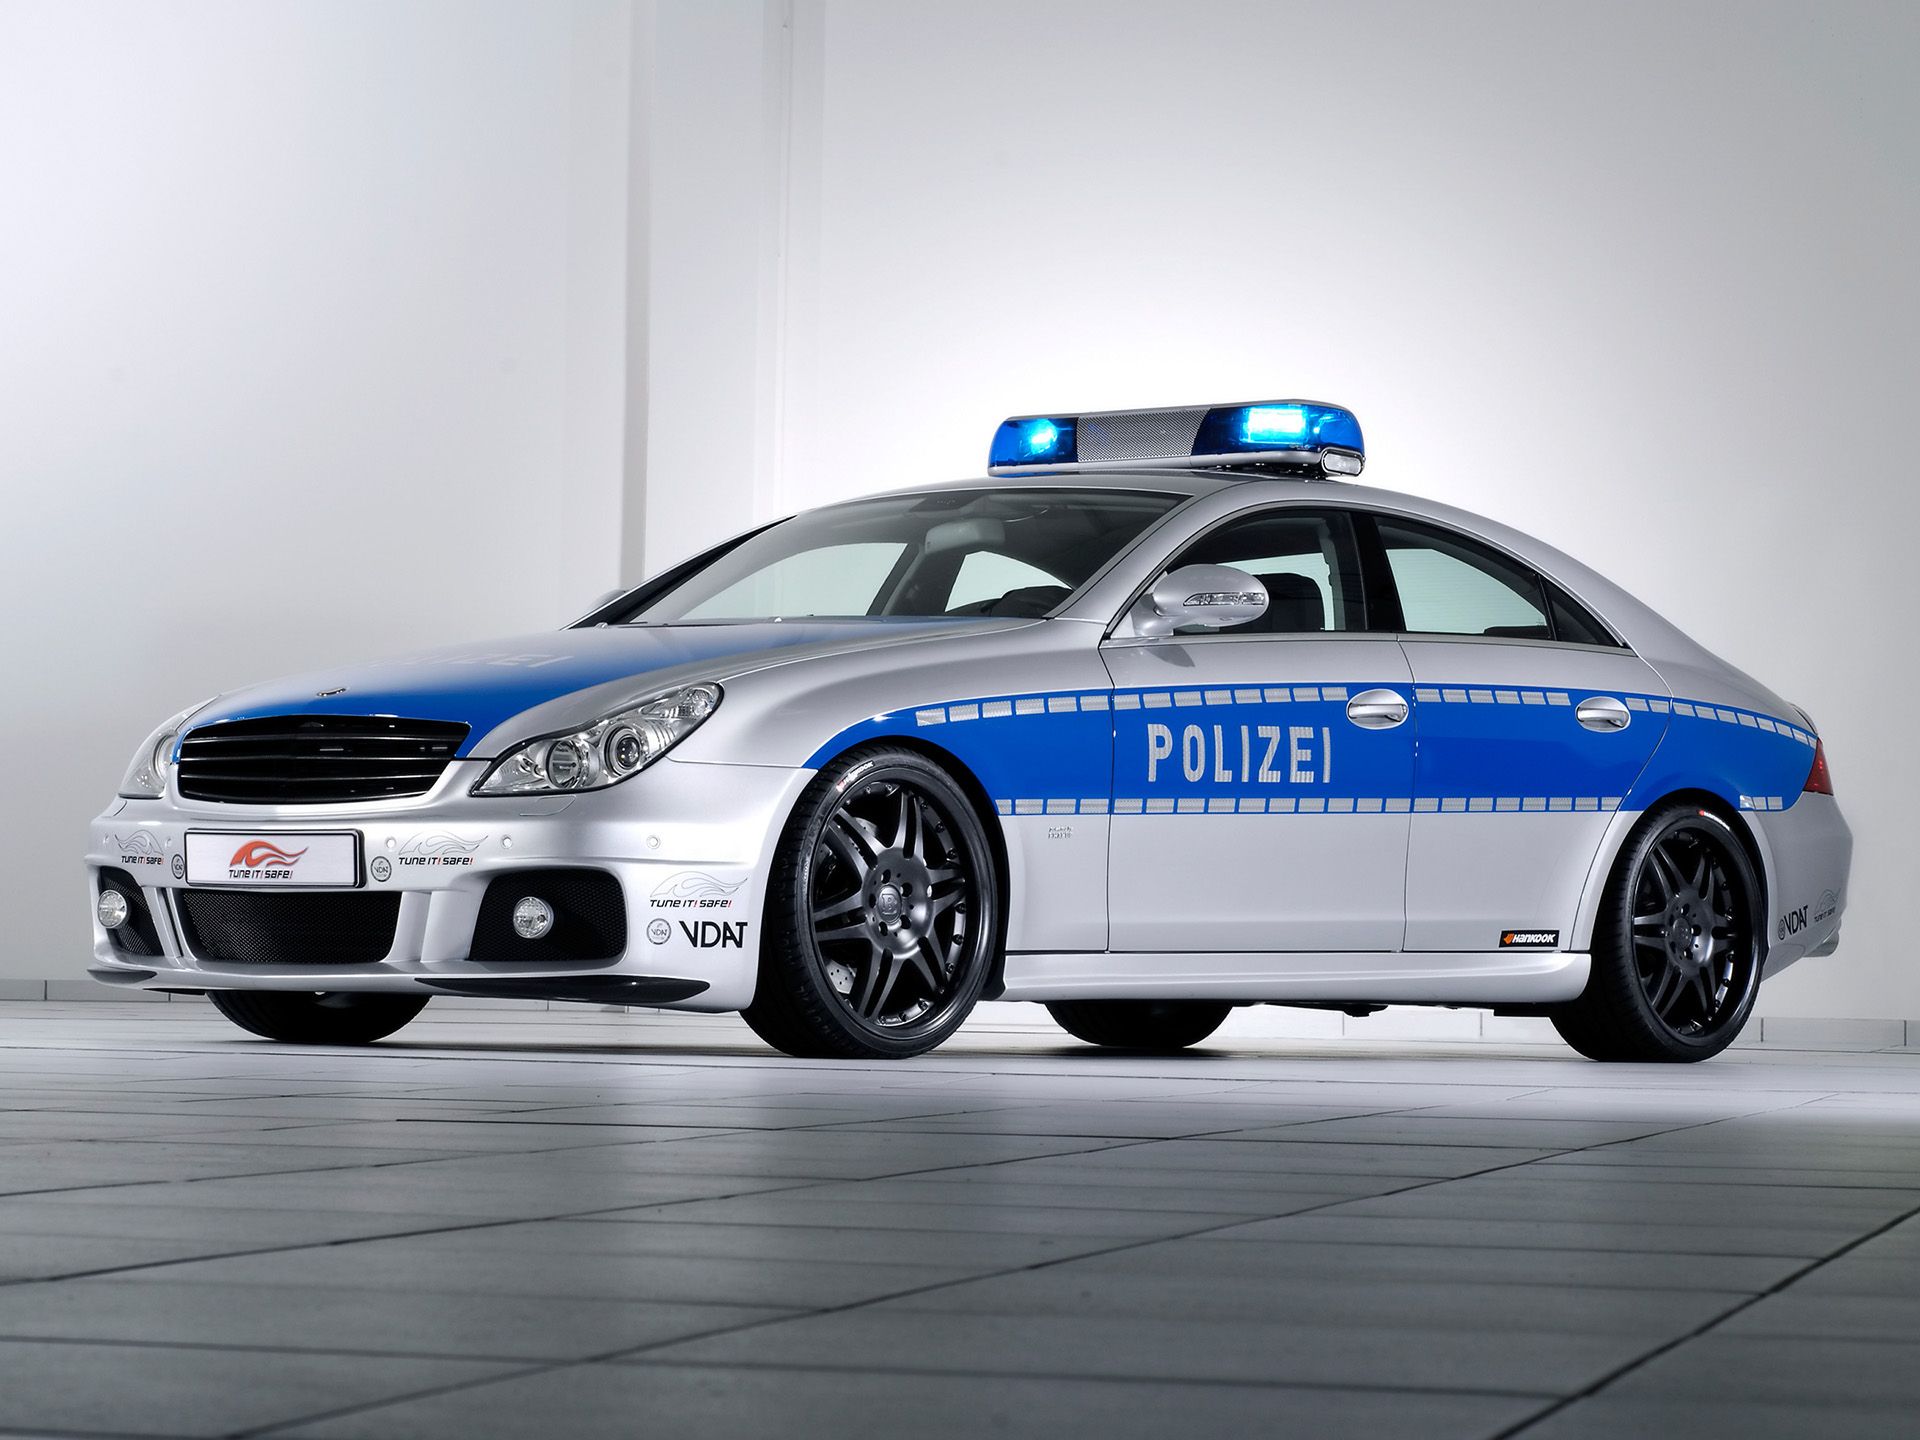 Brabus Rocket Police Car Based On Mercedes Benz CLS And Side